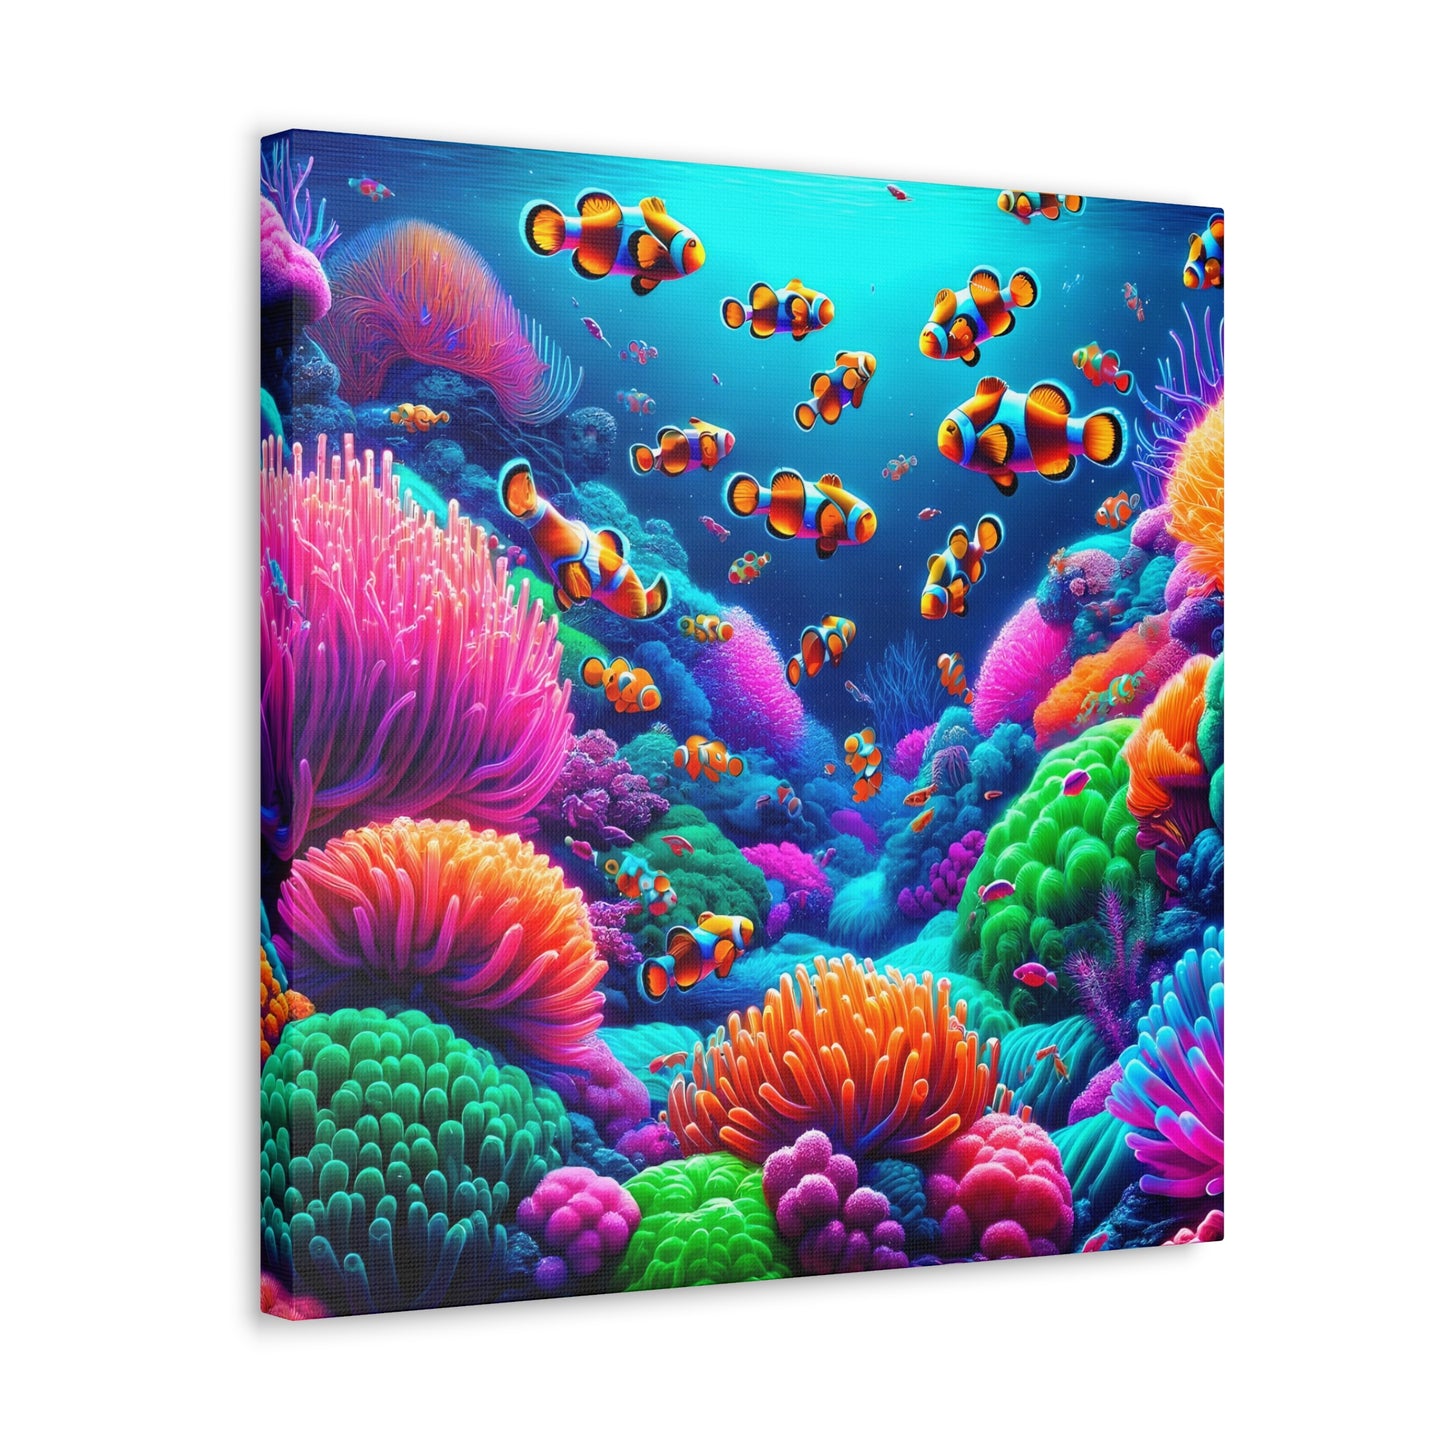 Clownfish Swimming in the Neon Reef